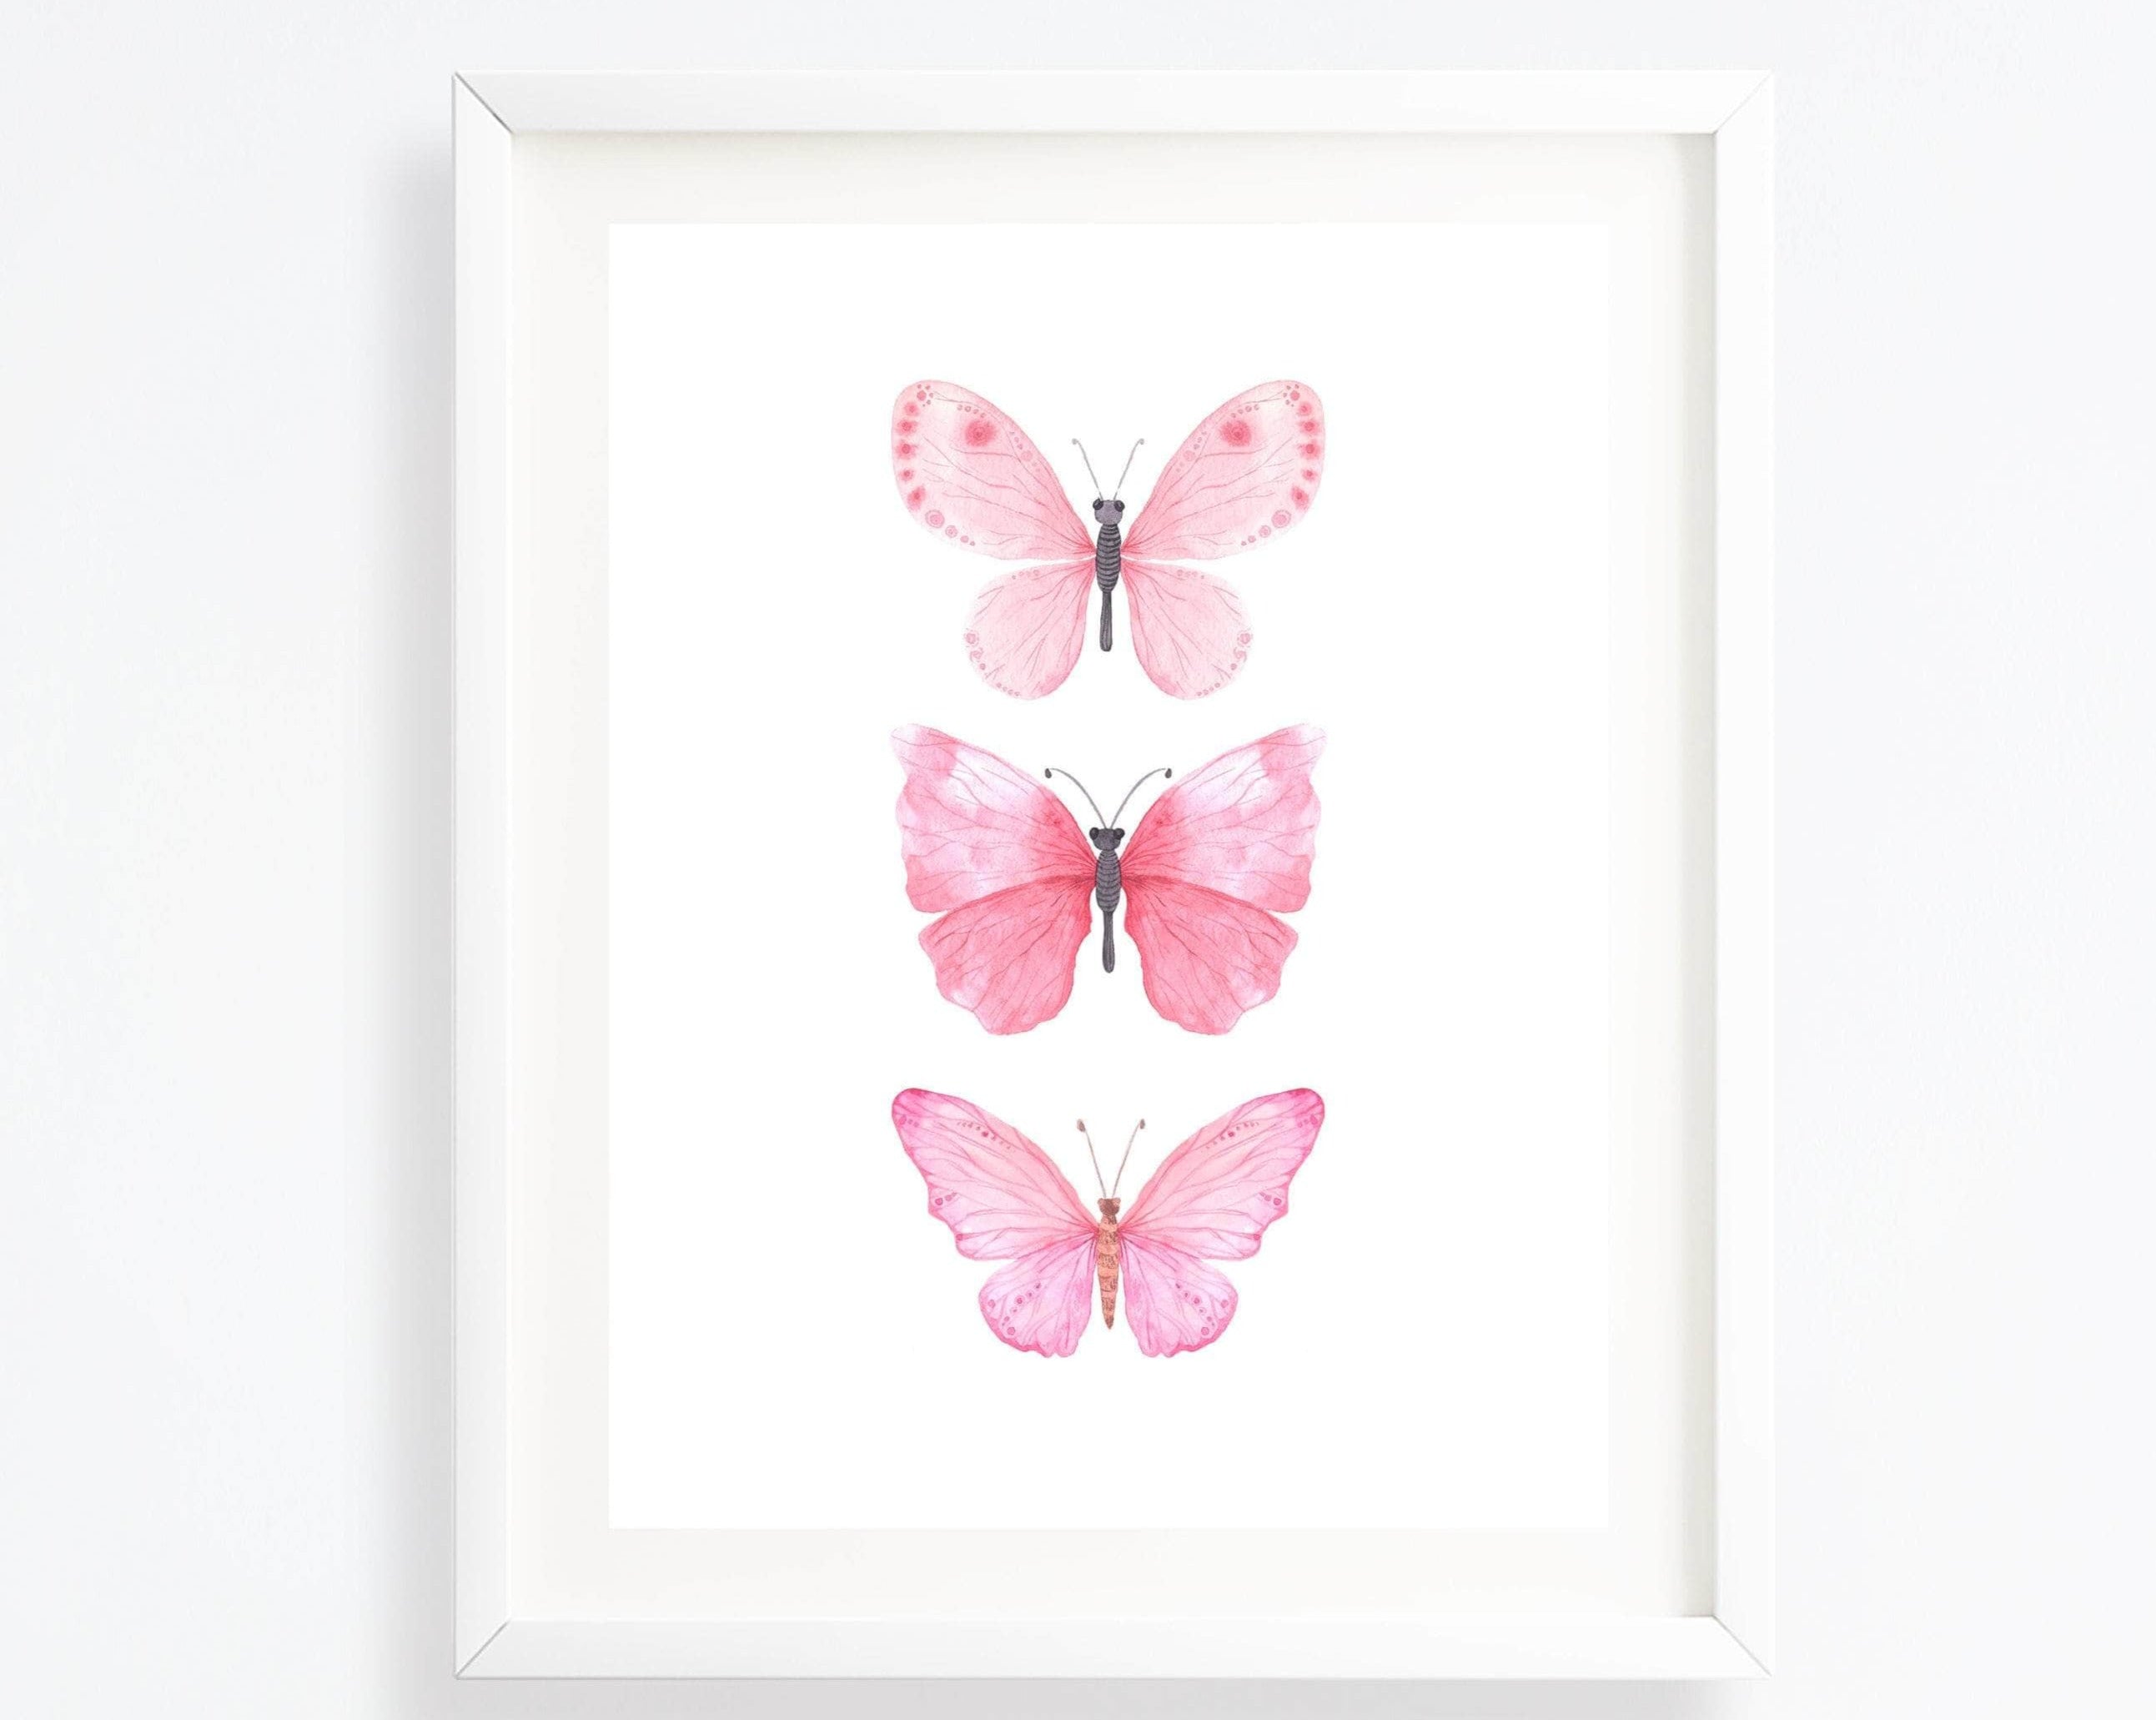 Girls bedroom wall art - Pink butterfly print - Butterfly prints wall art - Butterfly wall art - Butterfly printable art - Girls room prints nursery art print baby nursery bedroom decor